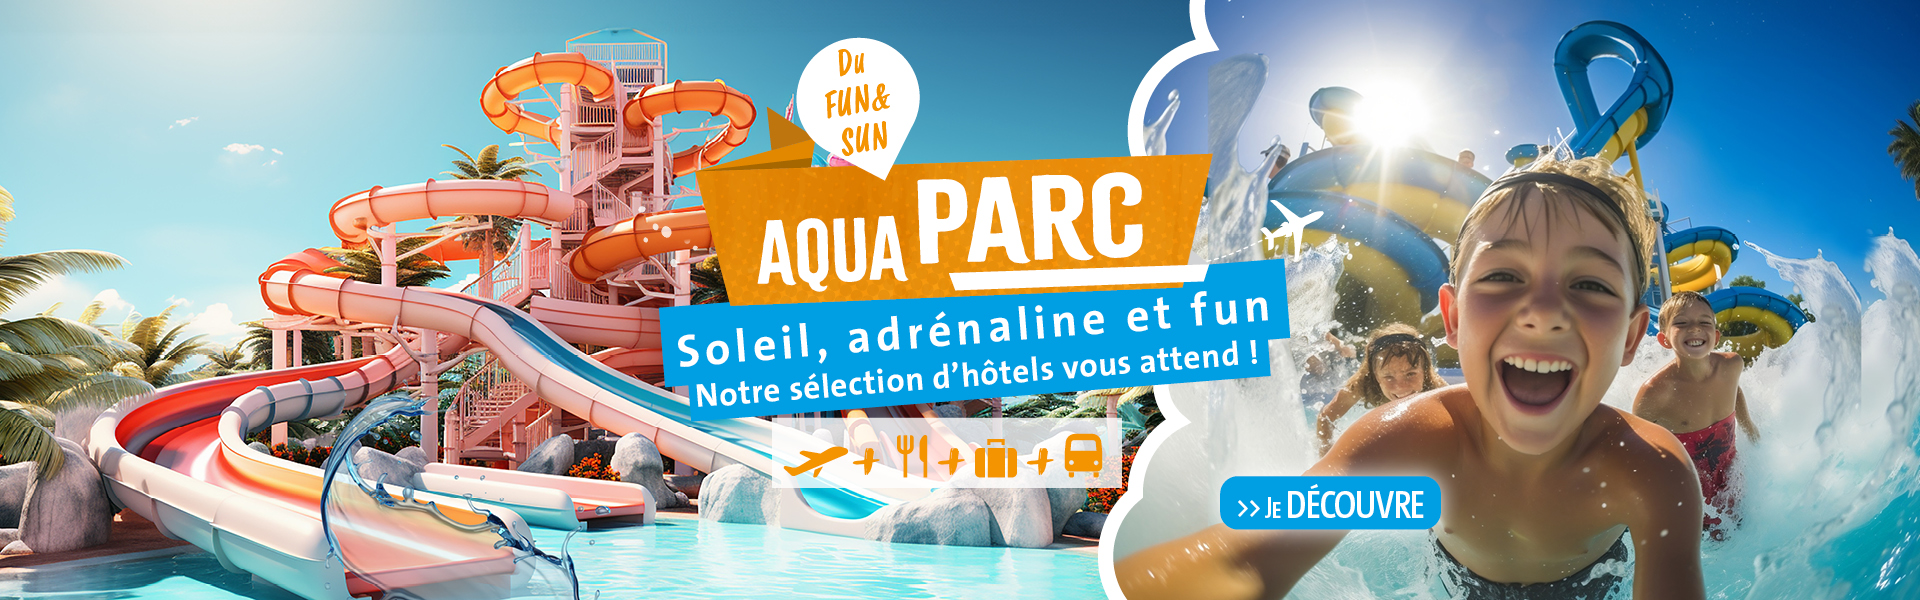 Ilustration Marketing, offre Famille FTI Voyages, Hotel avec Aquapark